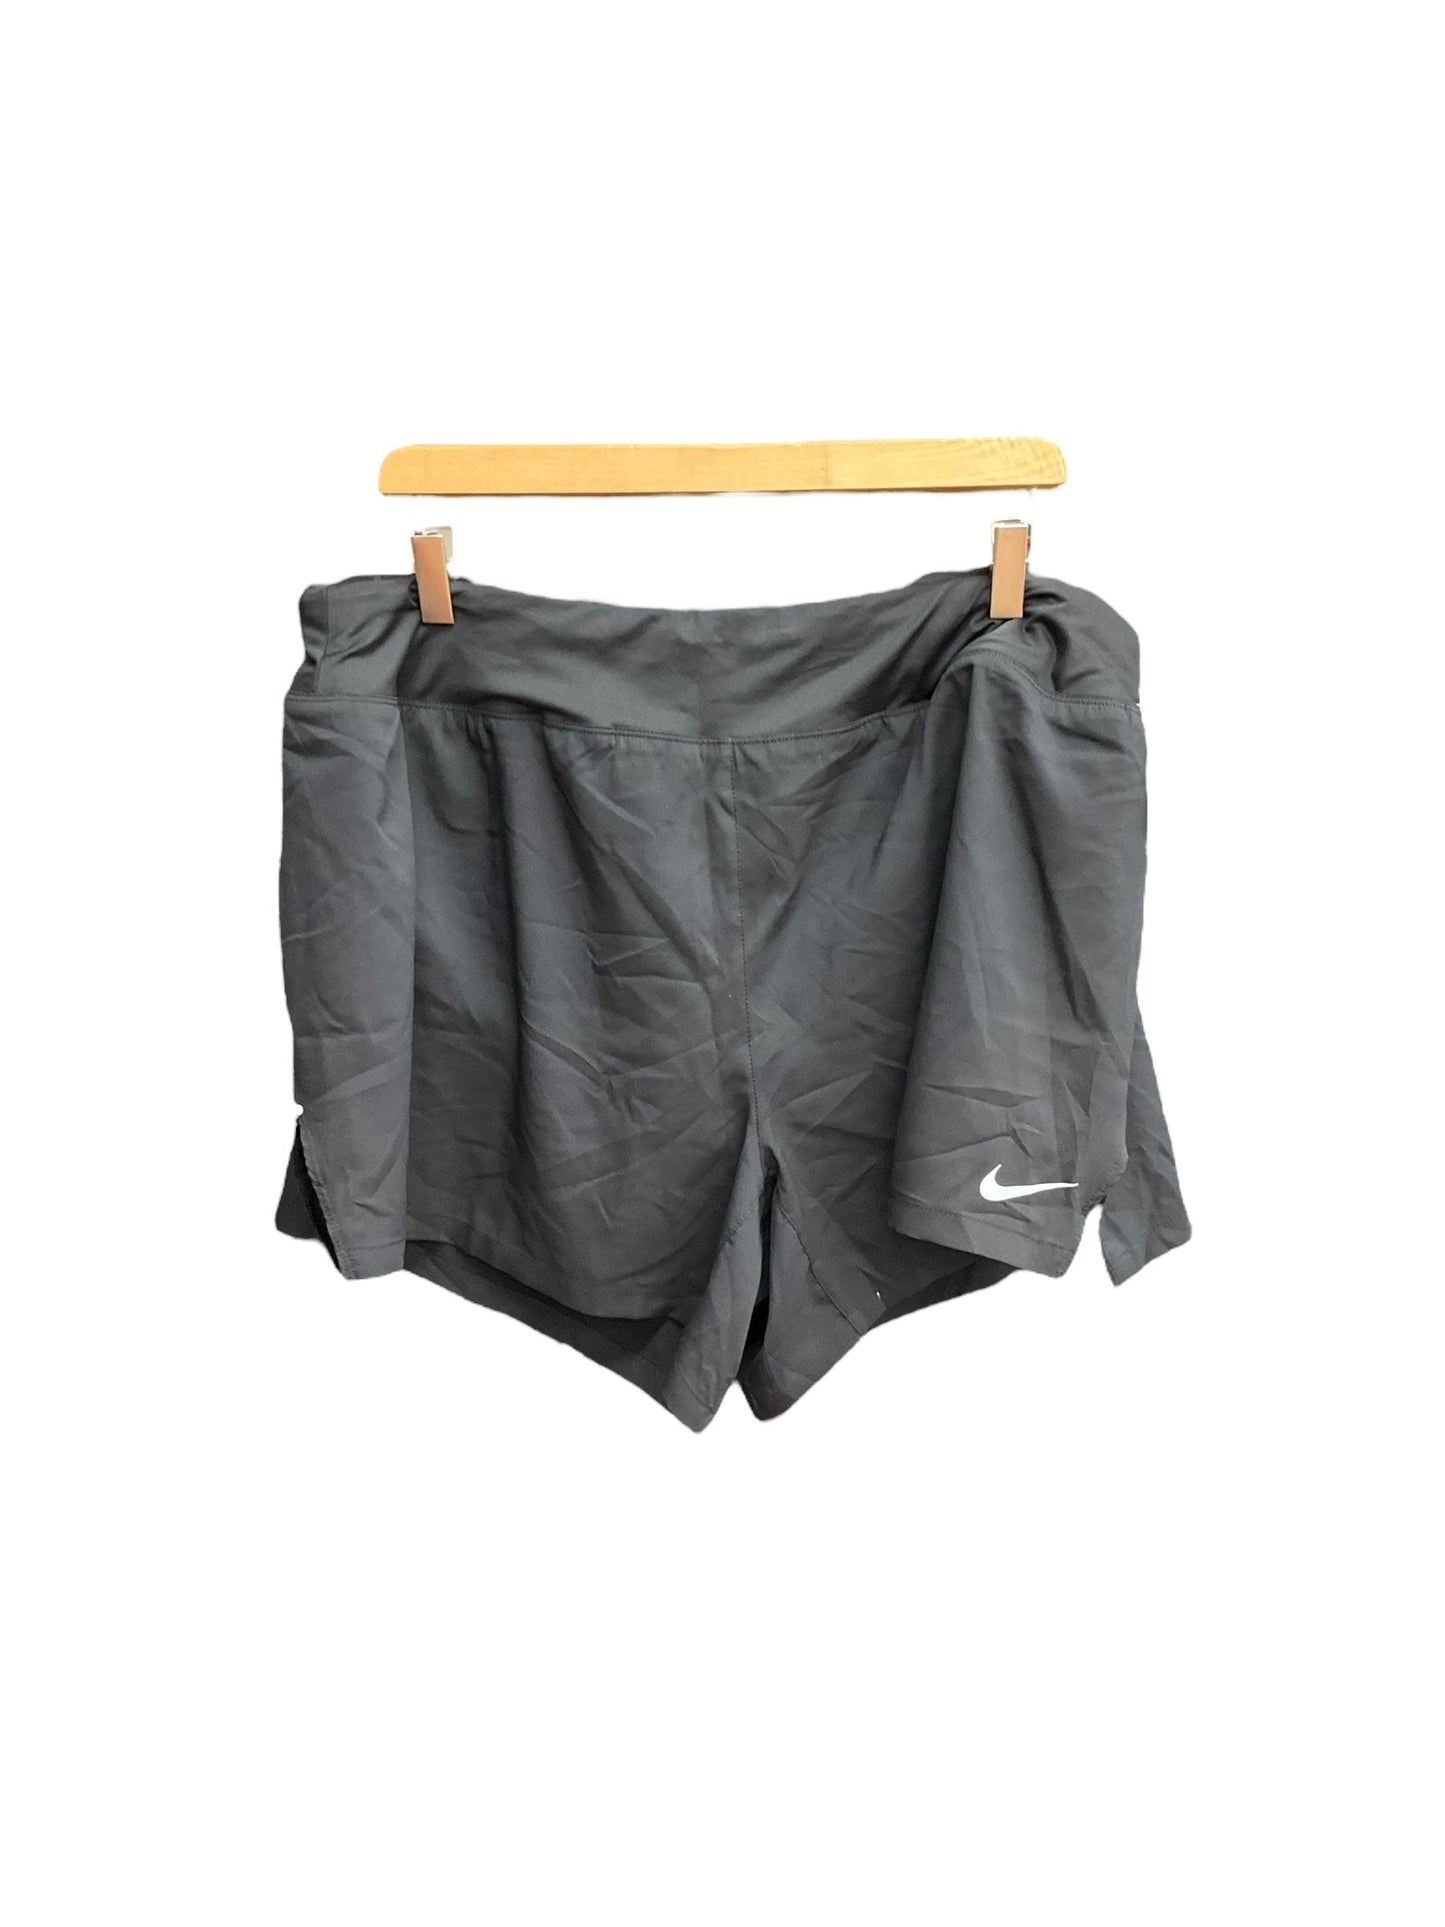 Black Athletic Shorts Nike Apparel, Size 1x